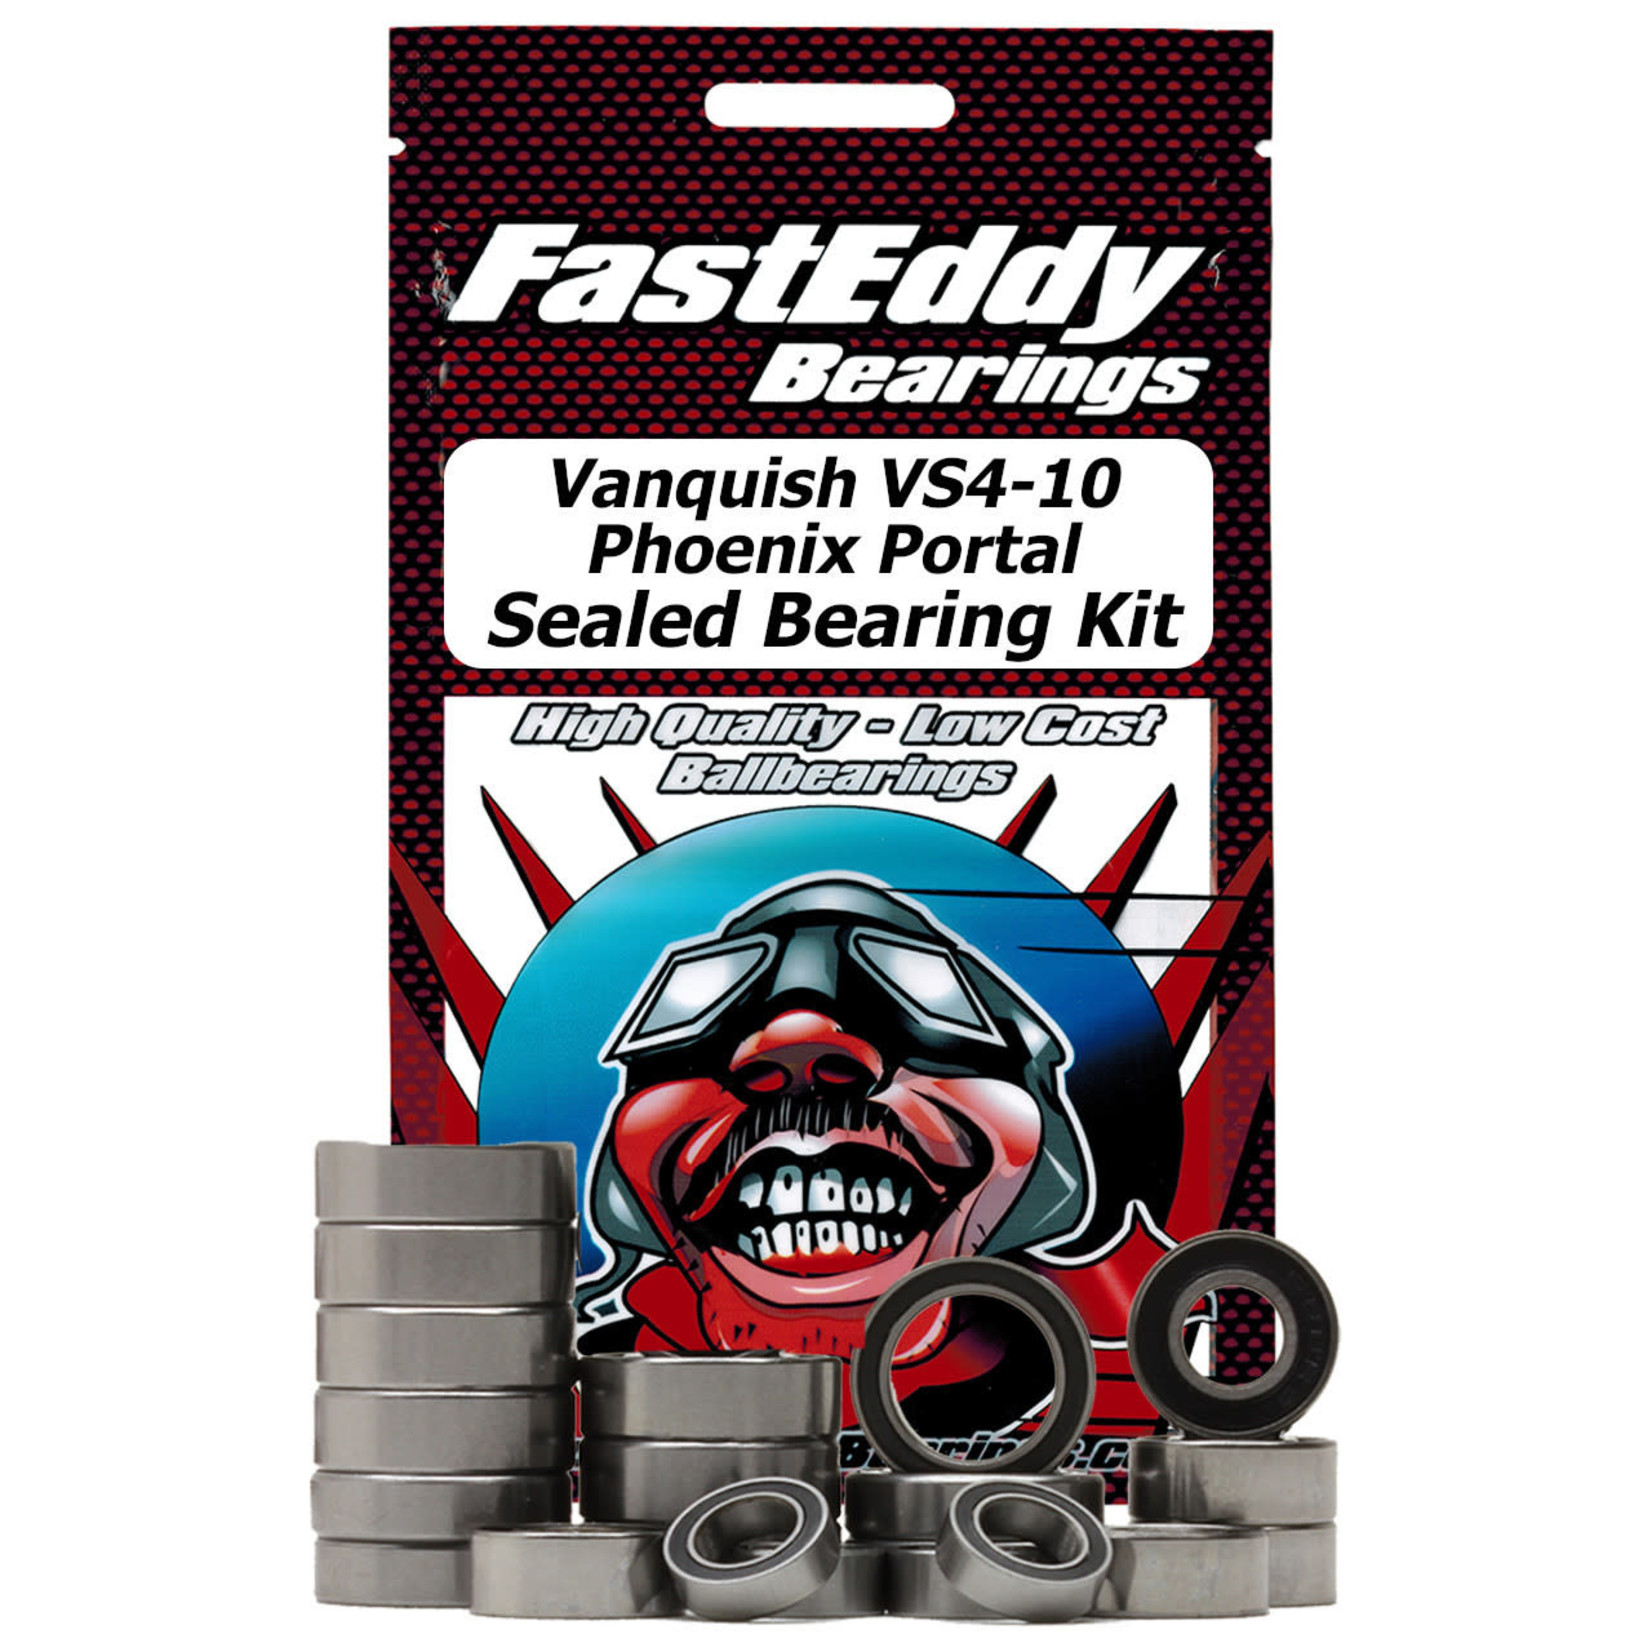 FastEddy FastEddy Bearings Vanquish VS4-10 Phoenix Portal Sealed Bearing Kit #TFE7346